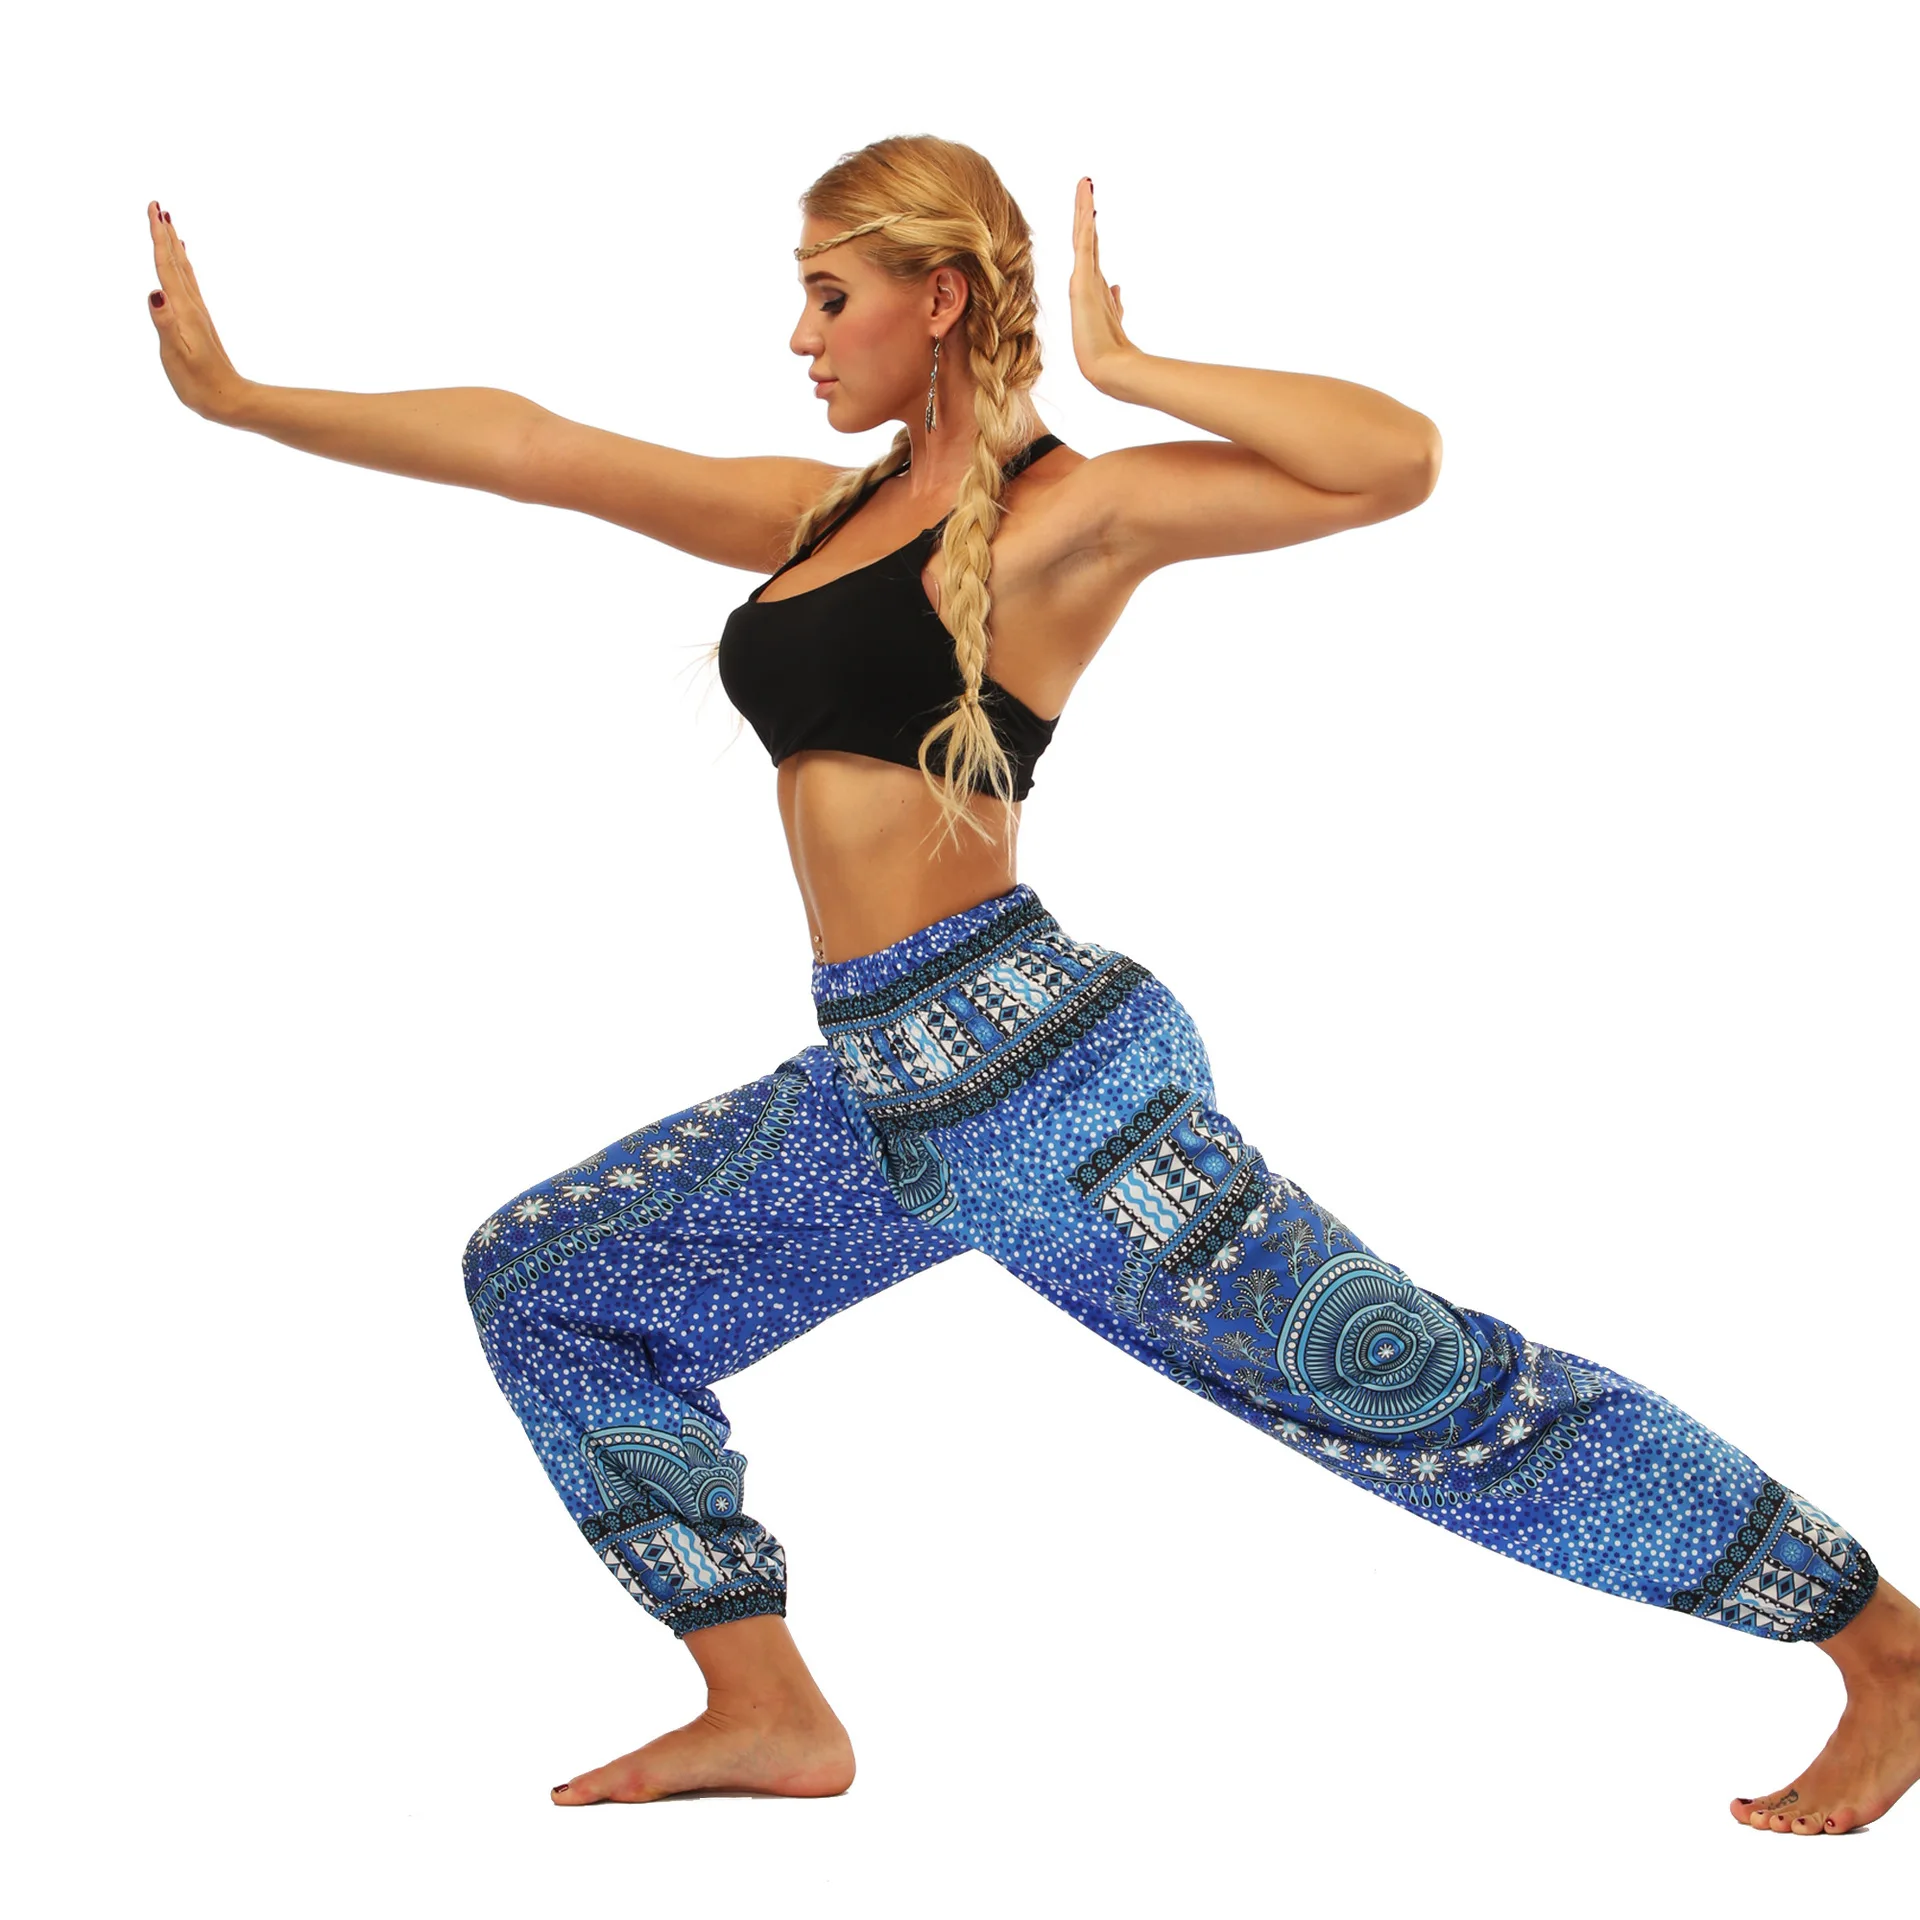 Women's Boho Pants High Waist Yoga Print Hippie Summer Beach Pants for Travel Vacation 2020 hot selling